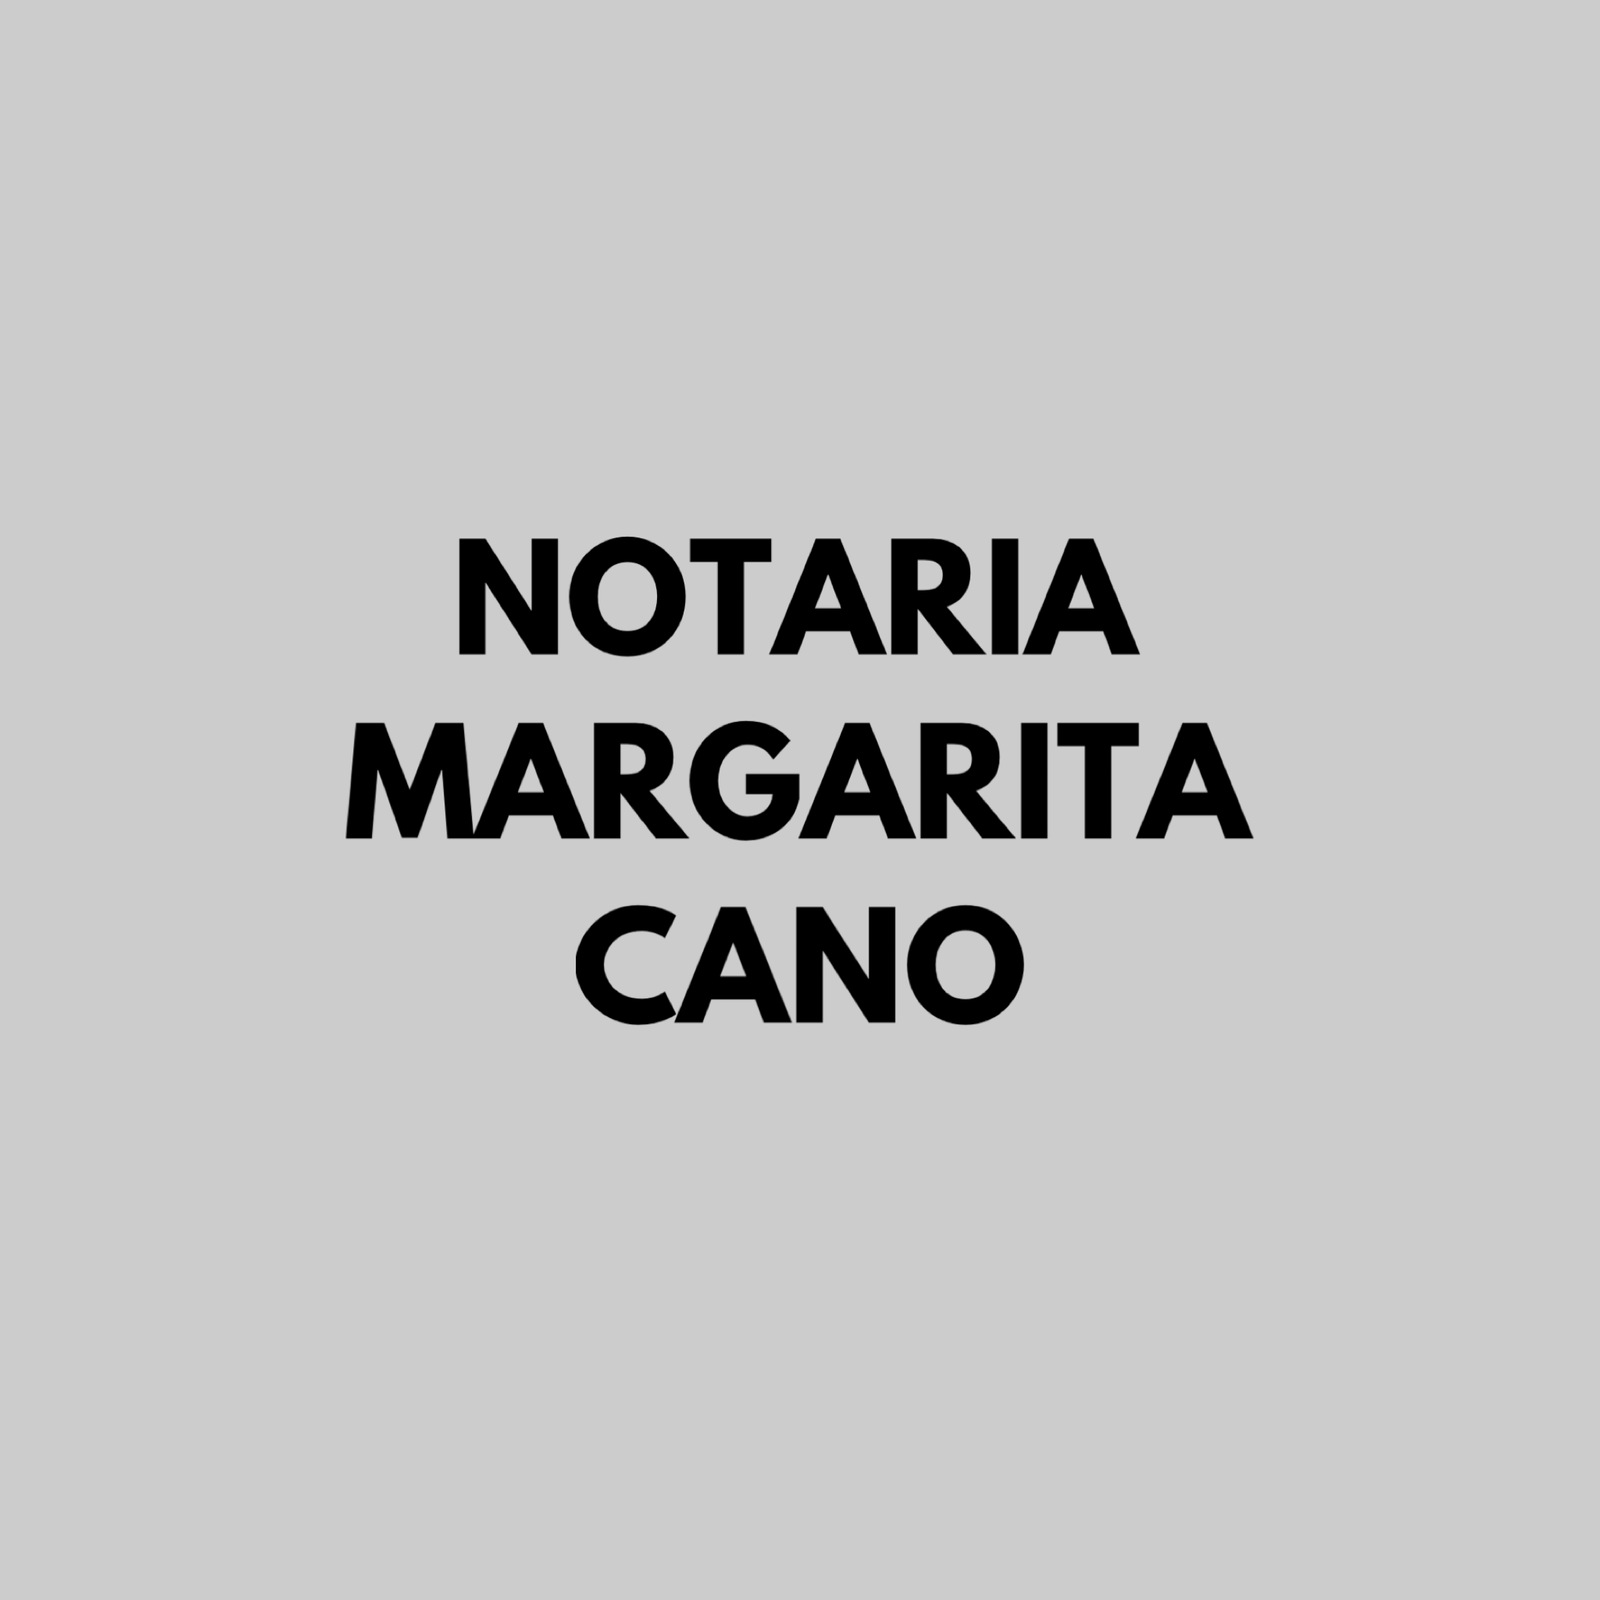 Notaria Margarita Cano